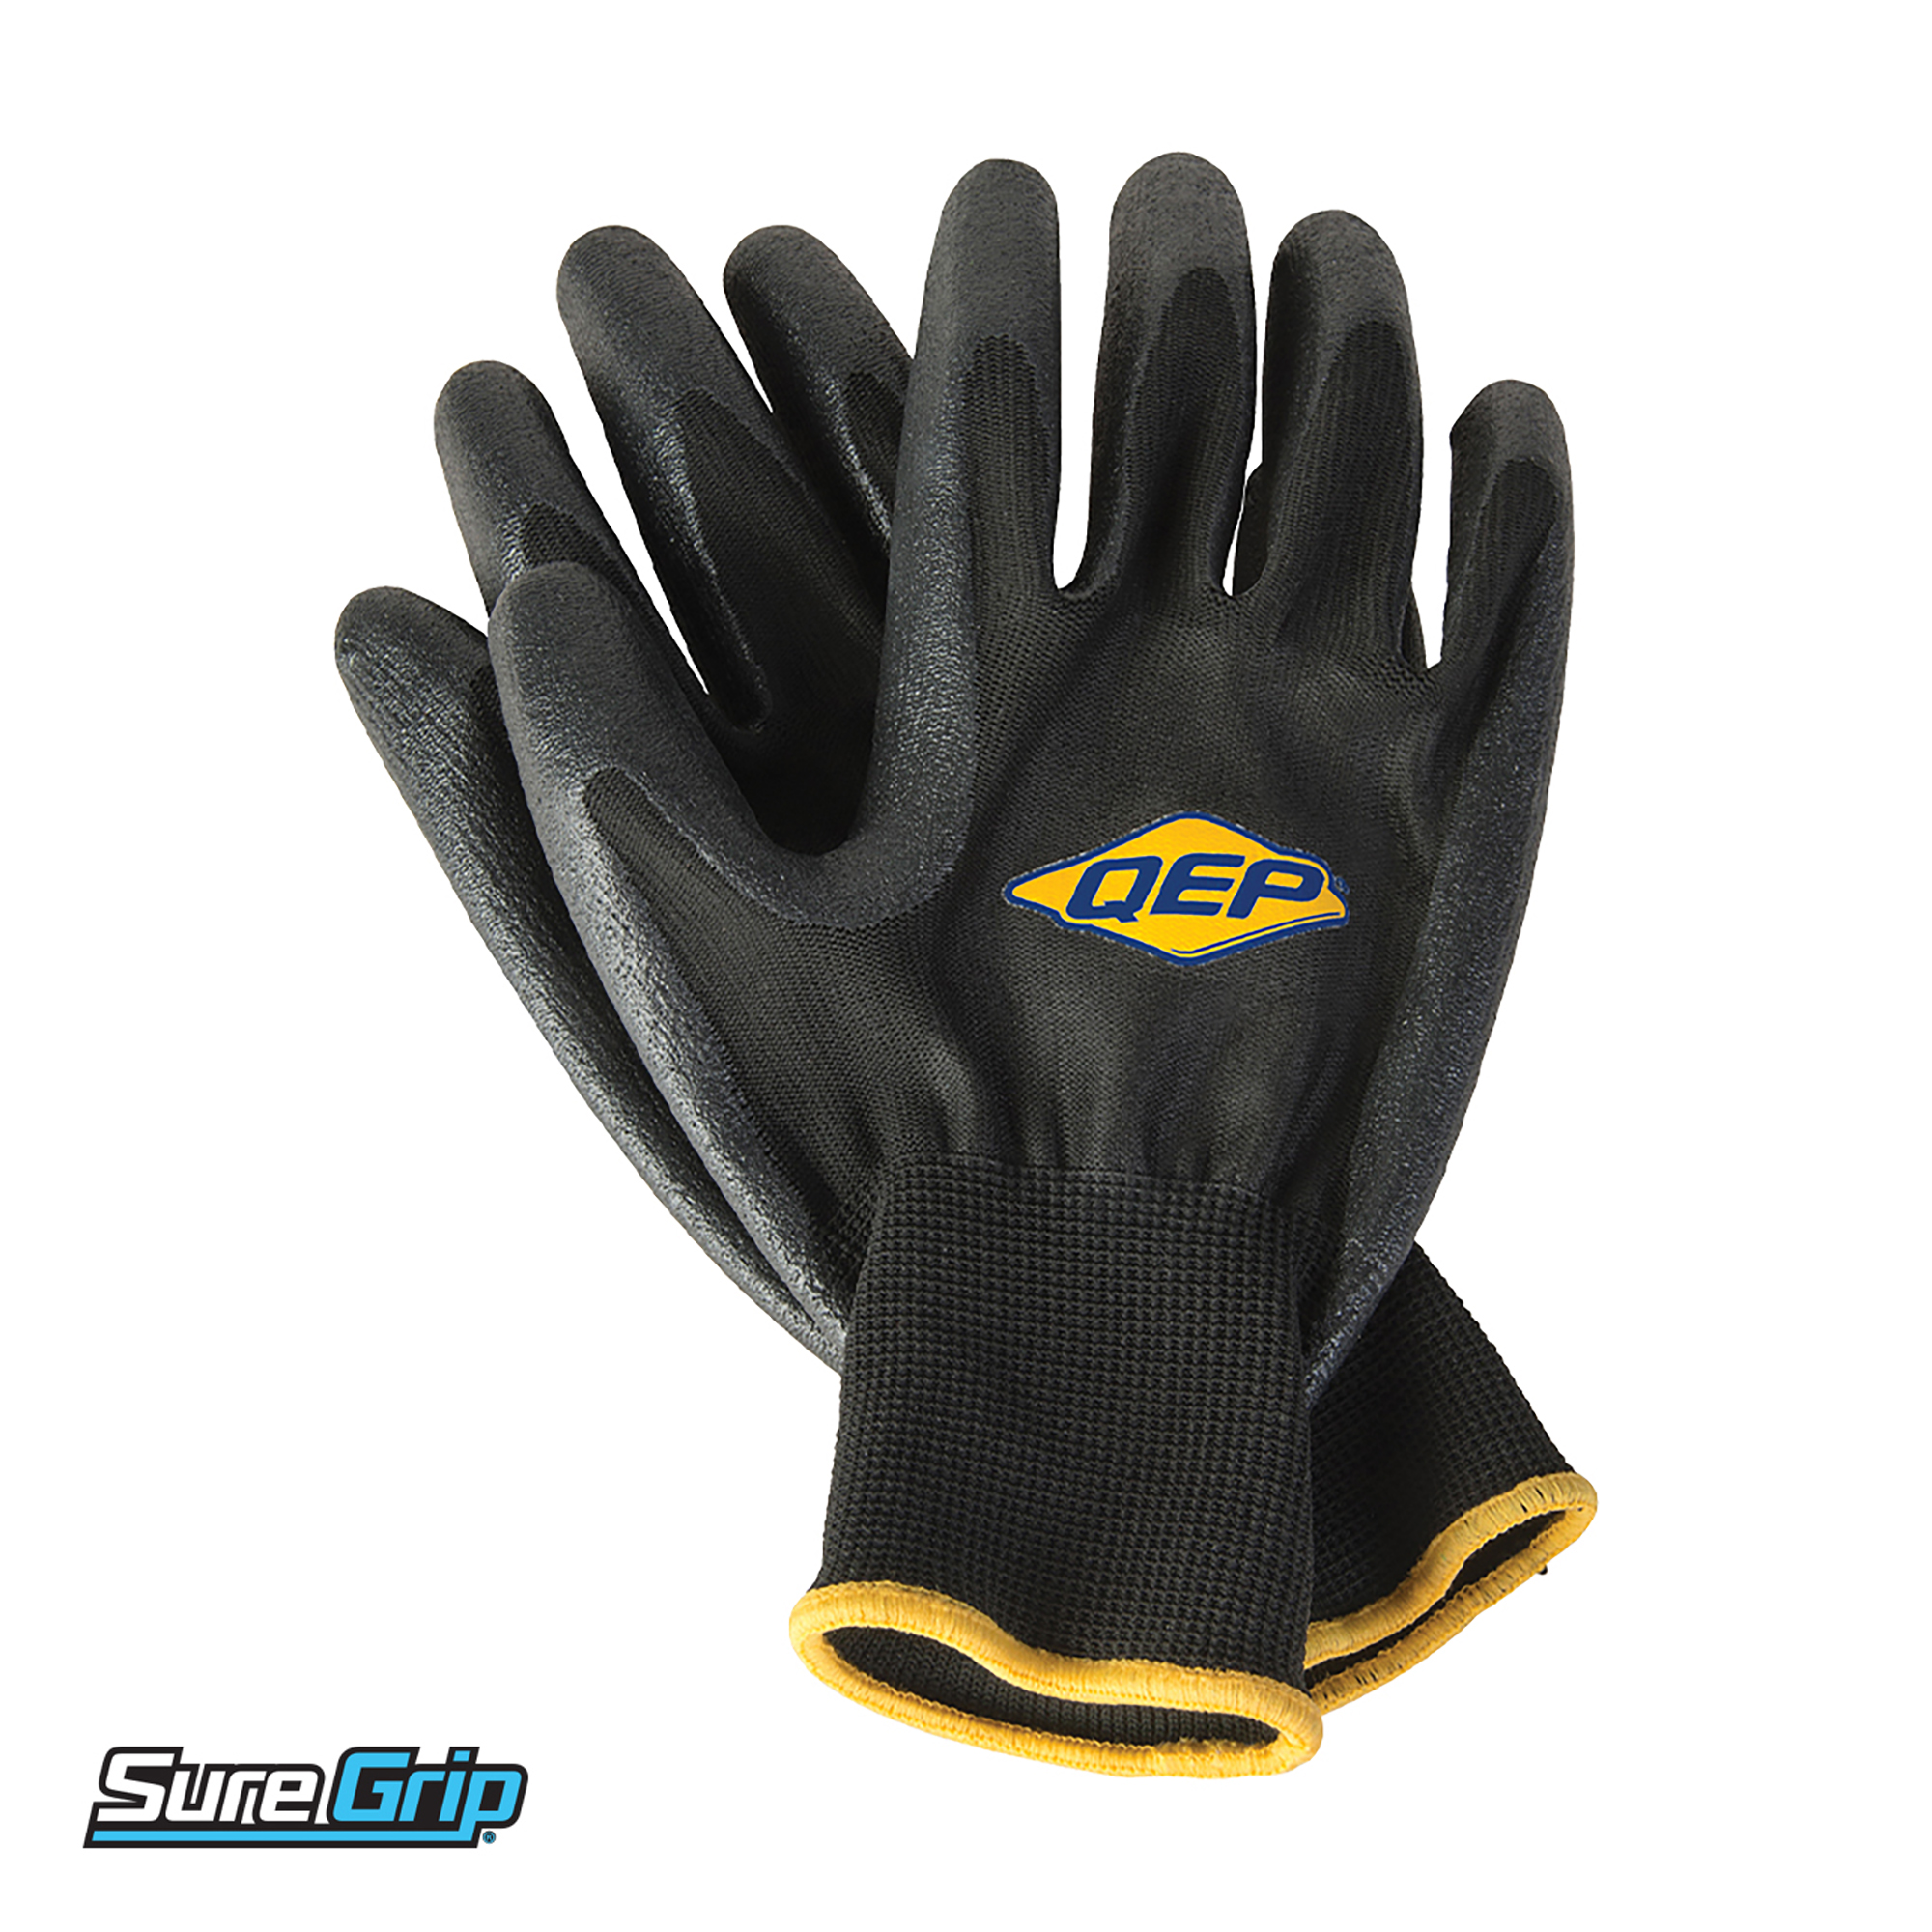 SureGrip® Tiler's Gloves